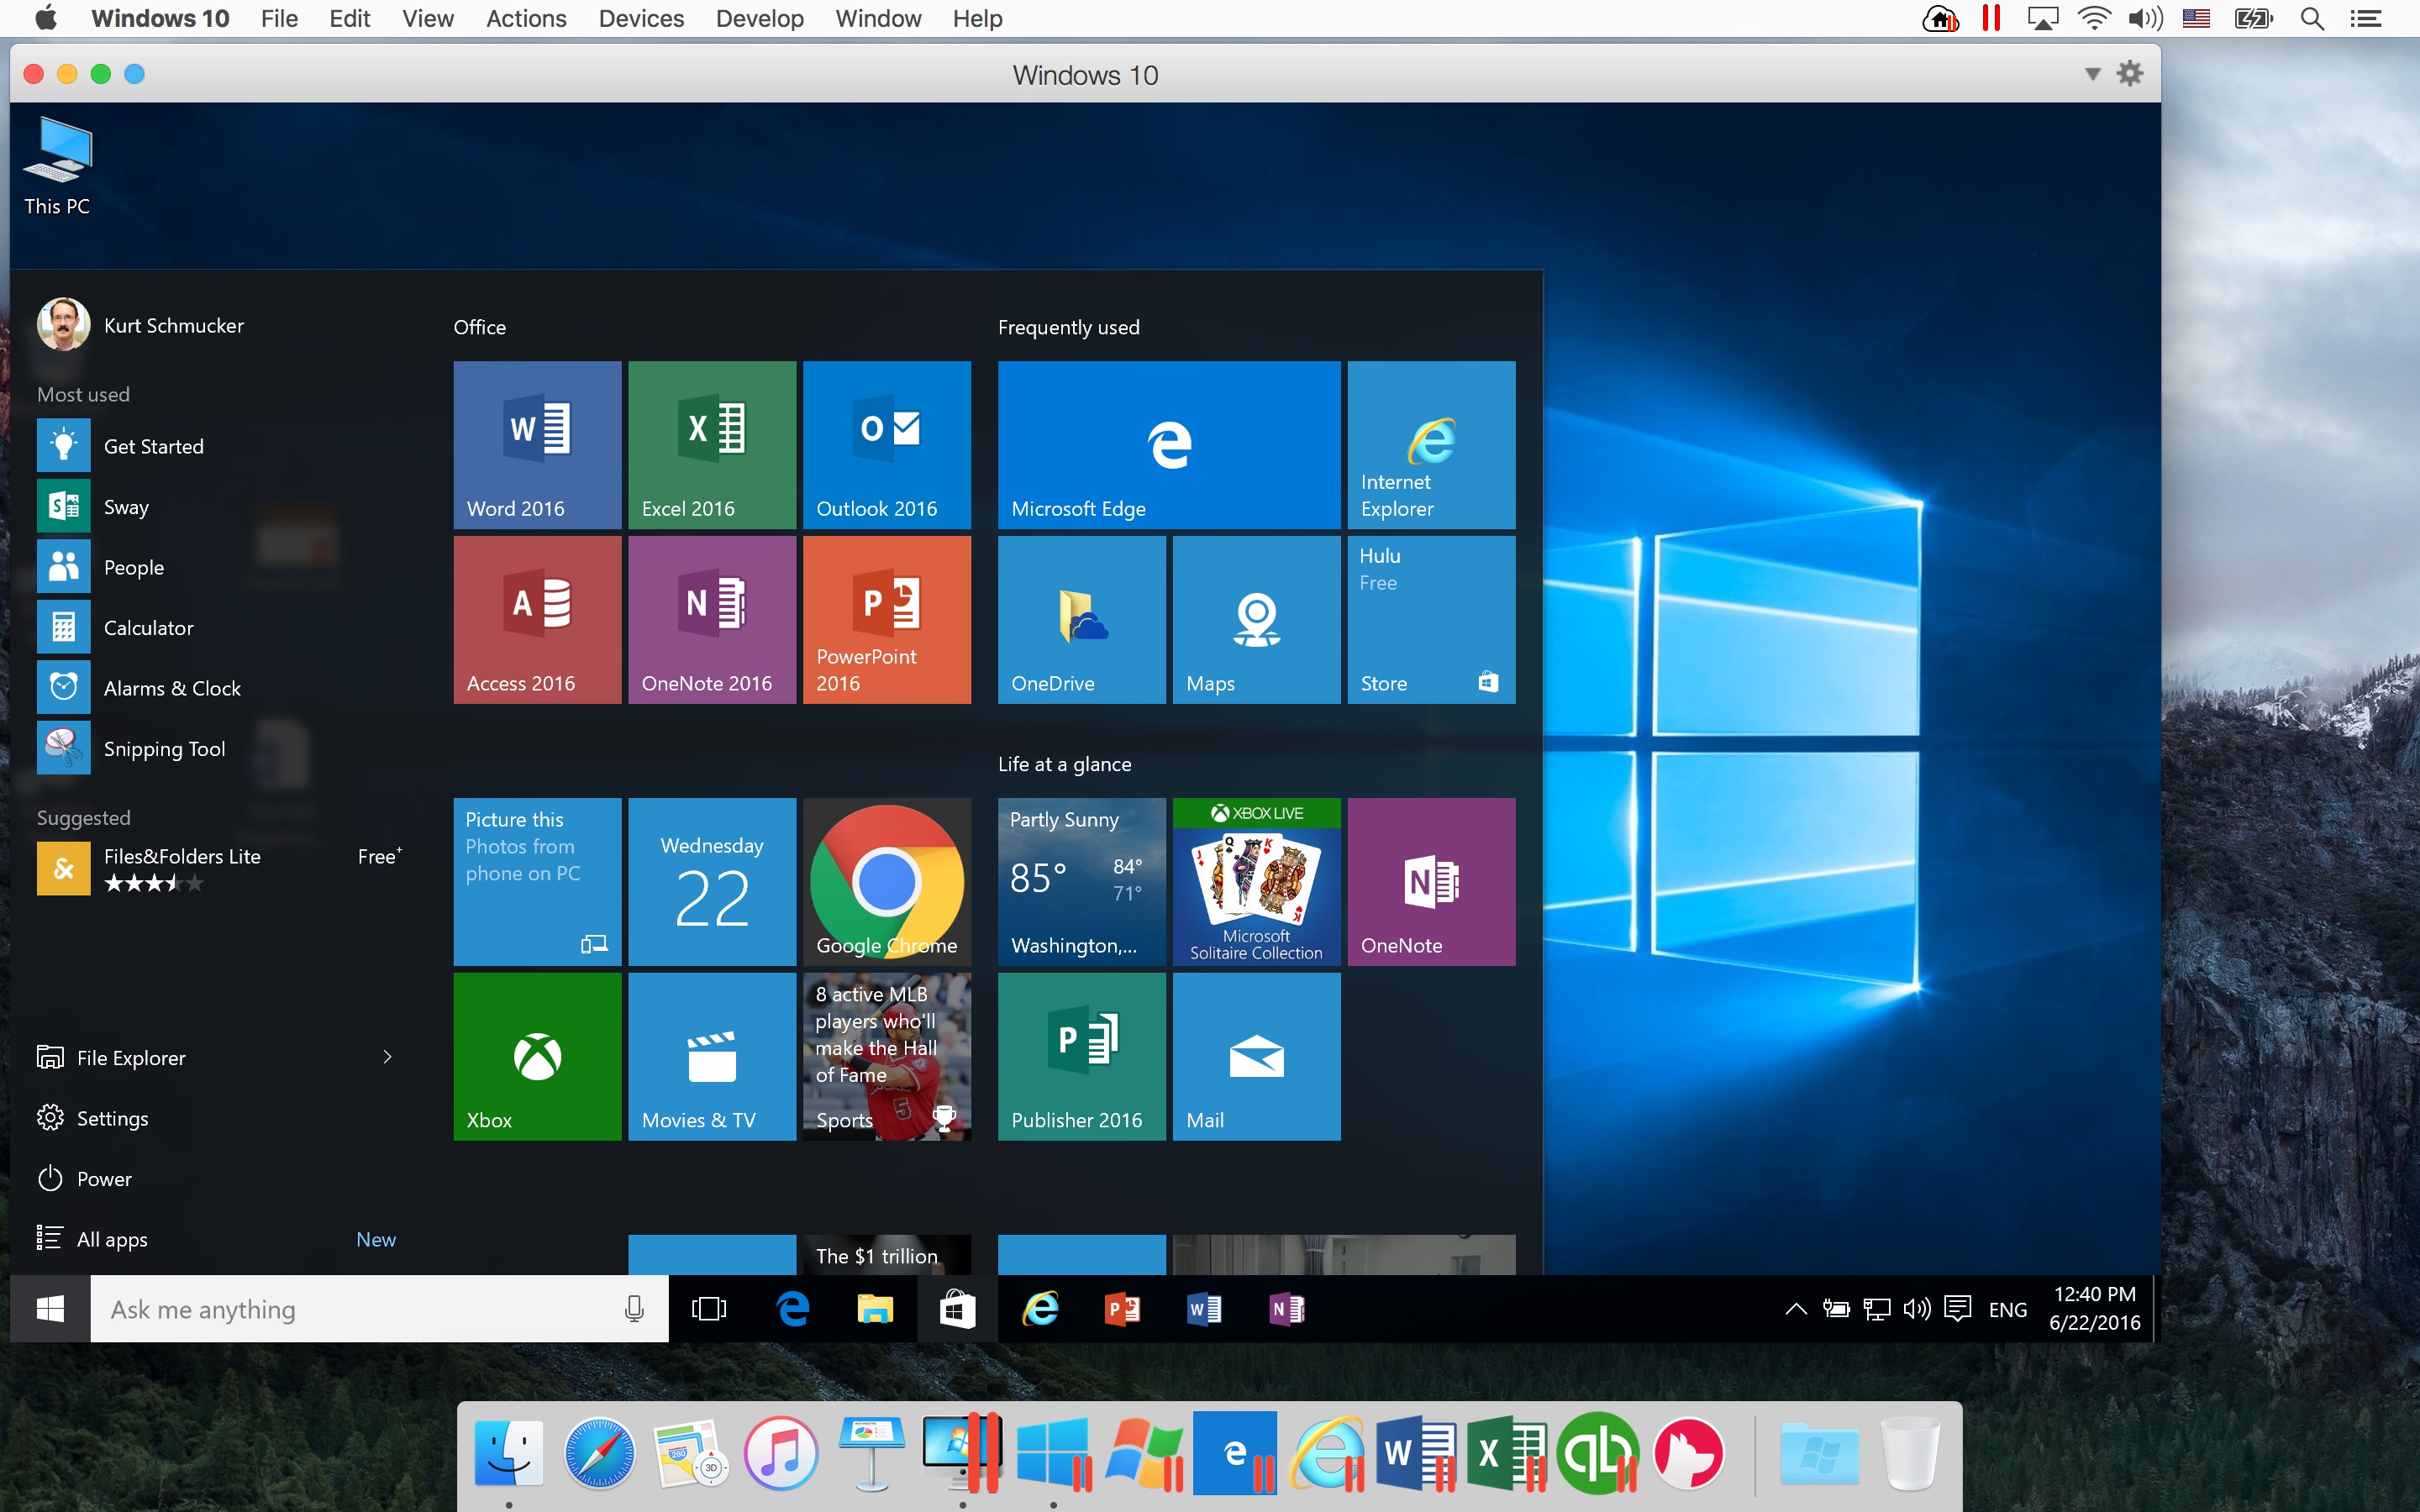 Windows Phone App For Desktop Xp Download